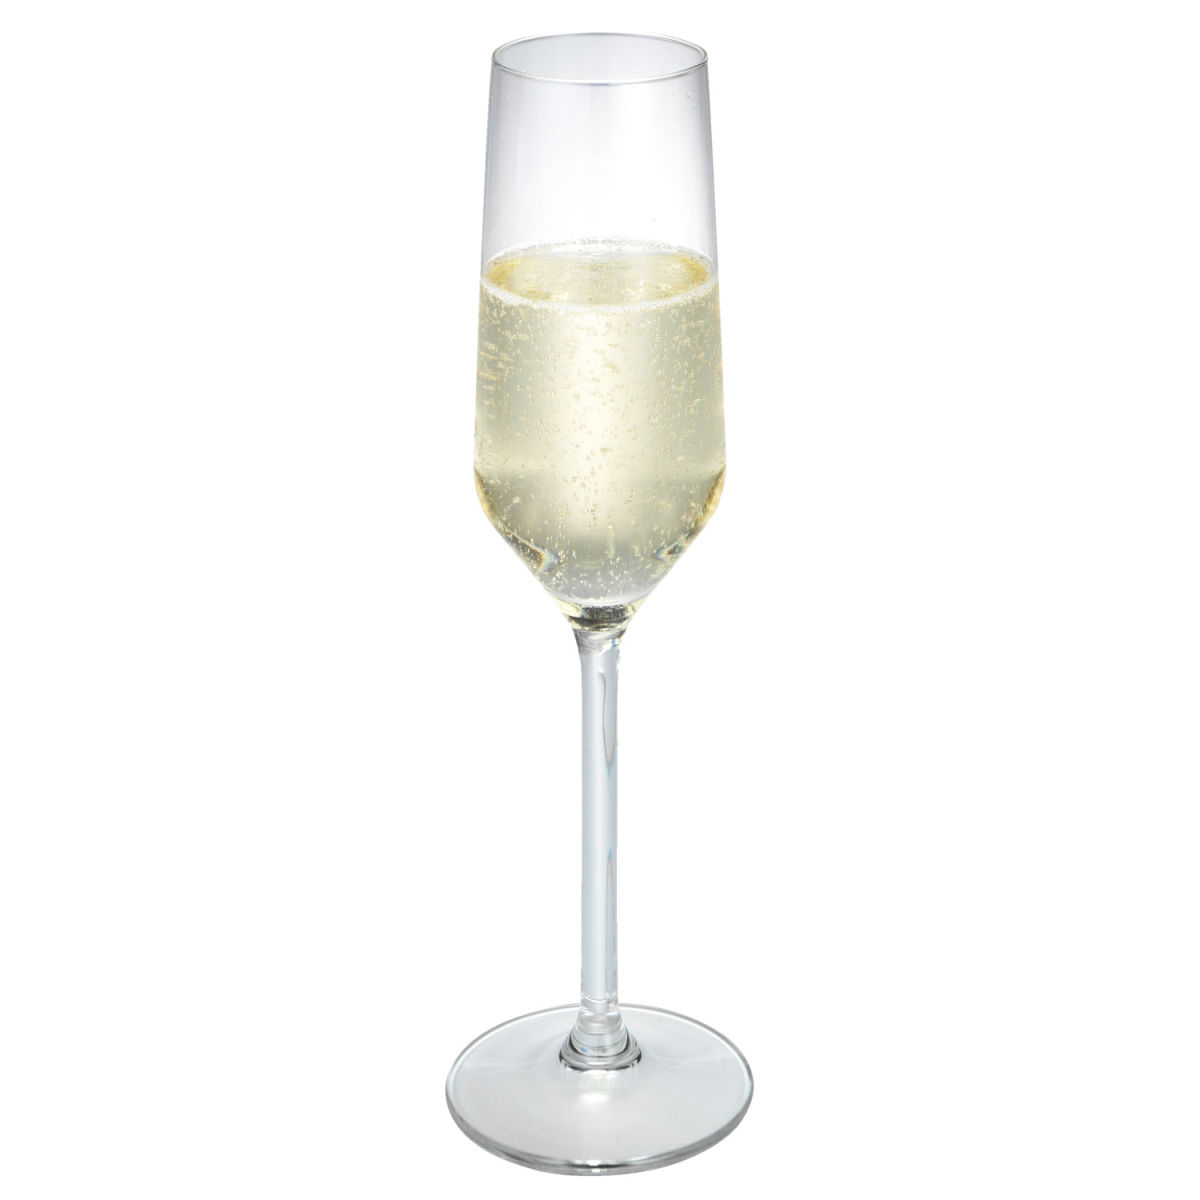 Royal leerdam Champagneglas Carré met vulstreepje; 220ml, 4.8x23 cm (ØxH); transparant; 0.1 l vulstreepje, 6 stuk / verpakking